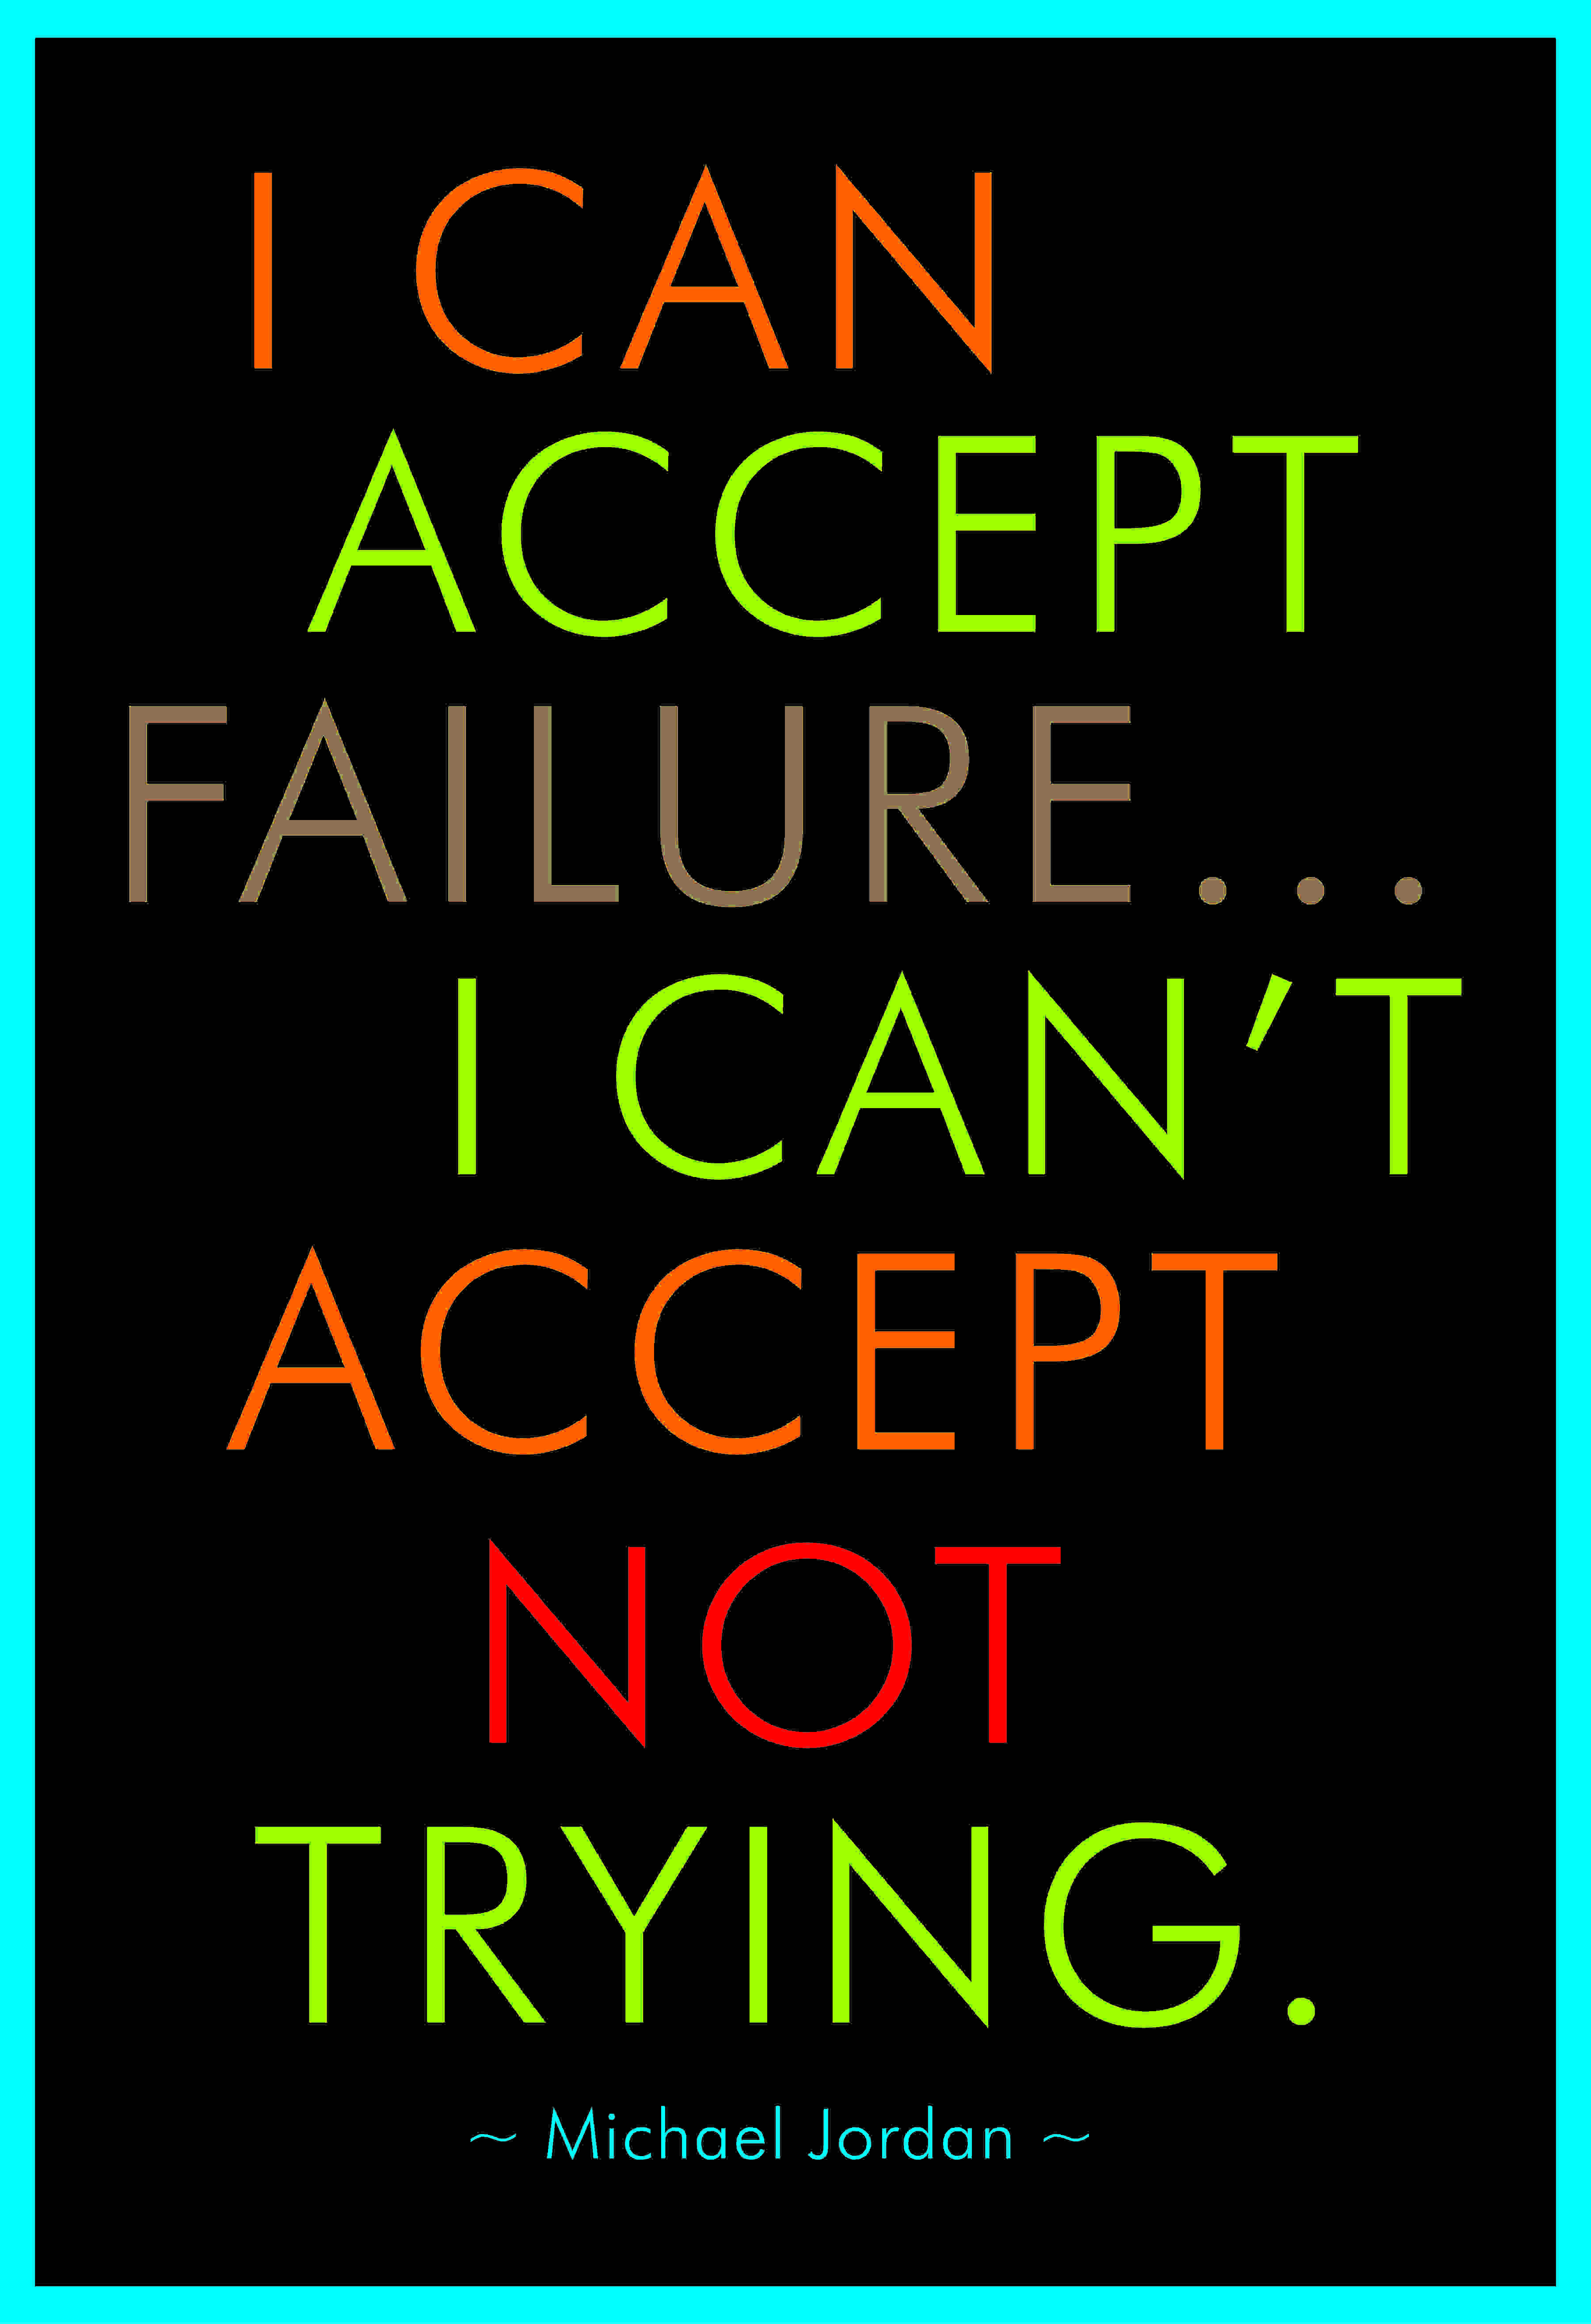 Michael Jordan Quote Photographic Paper Quotes Motivation Posters